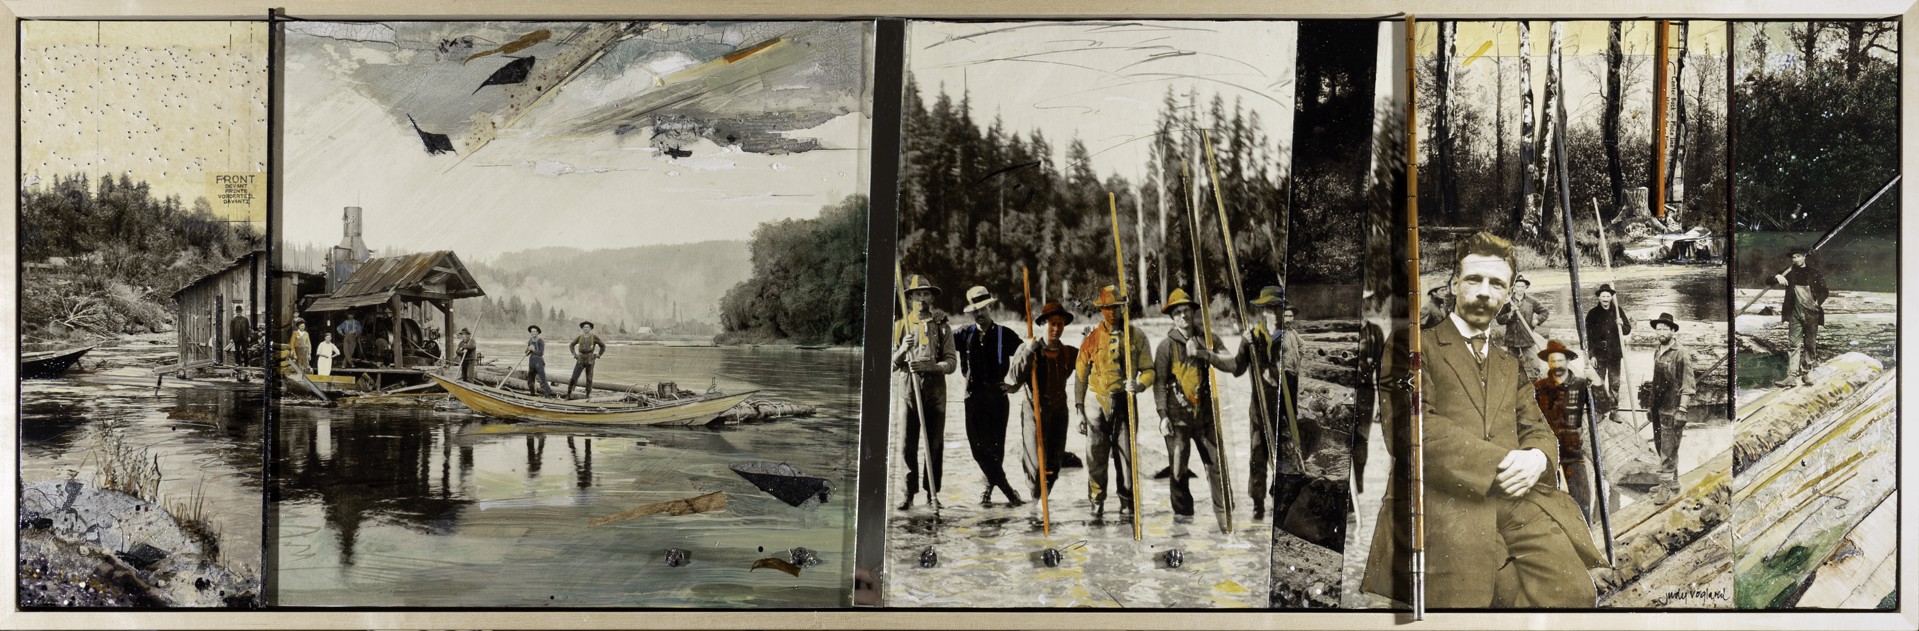 Private Pursuit of Scottish Hugh White Ingram and His Missing Logging Crew: Astoria, Oregon, 1919 by Judy Vogland